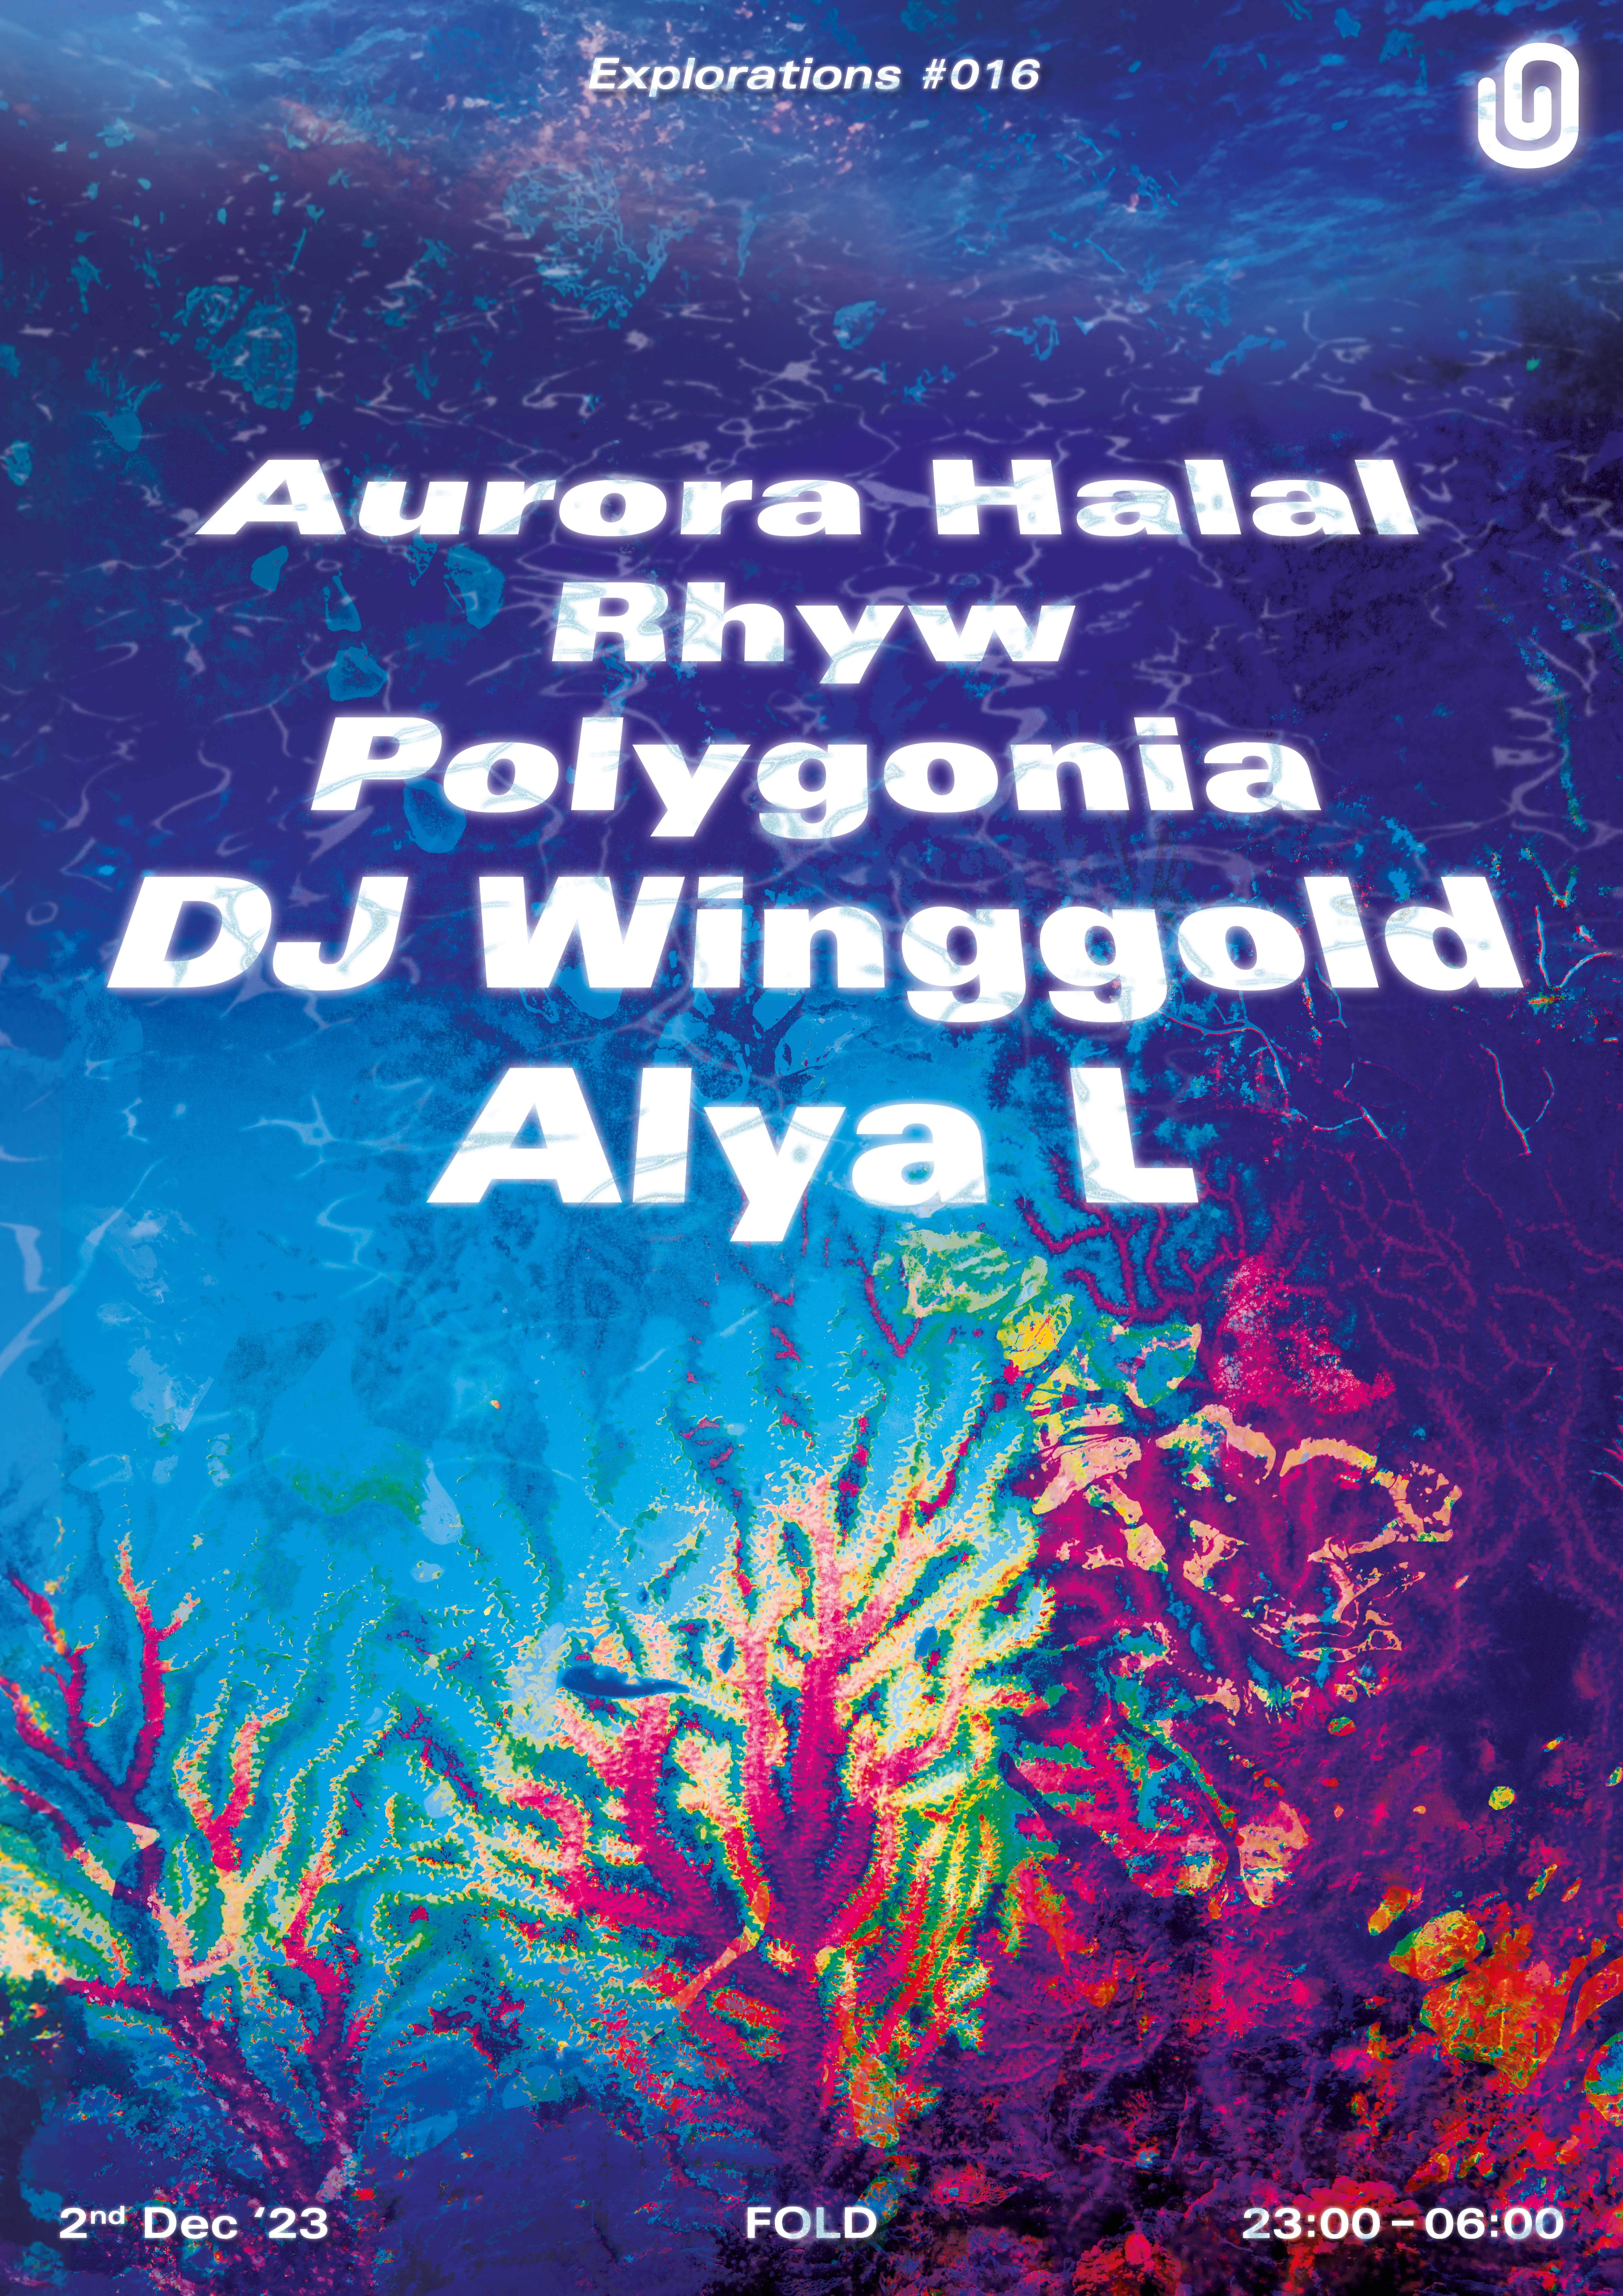 Unbound presents: Aurora Halal, Rhyw, Polygonia, ALYA L & DJ Winggold - フライヤー表